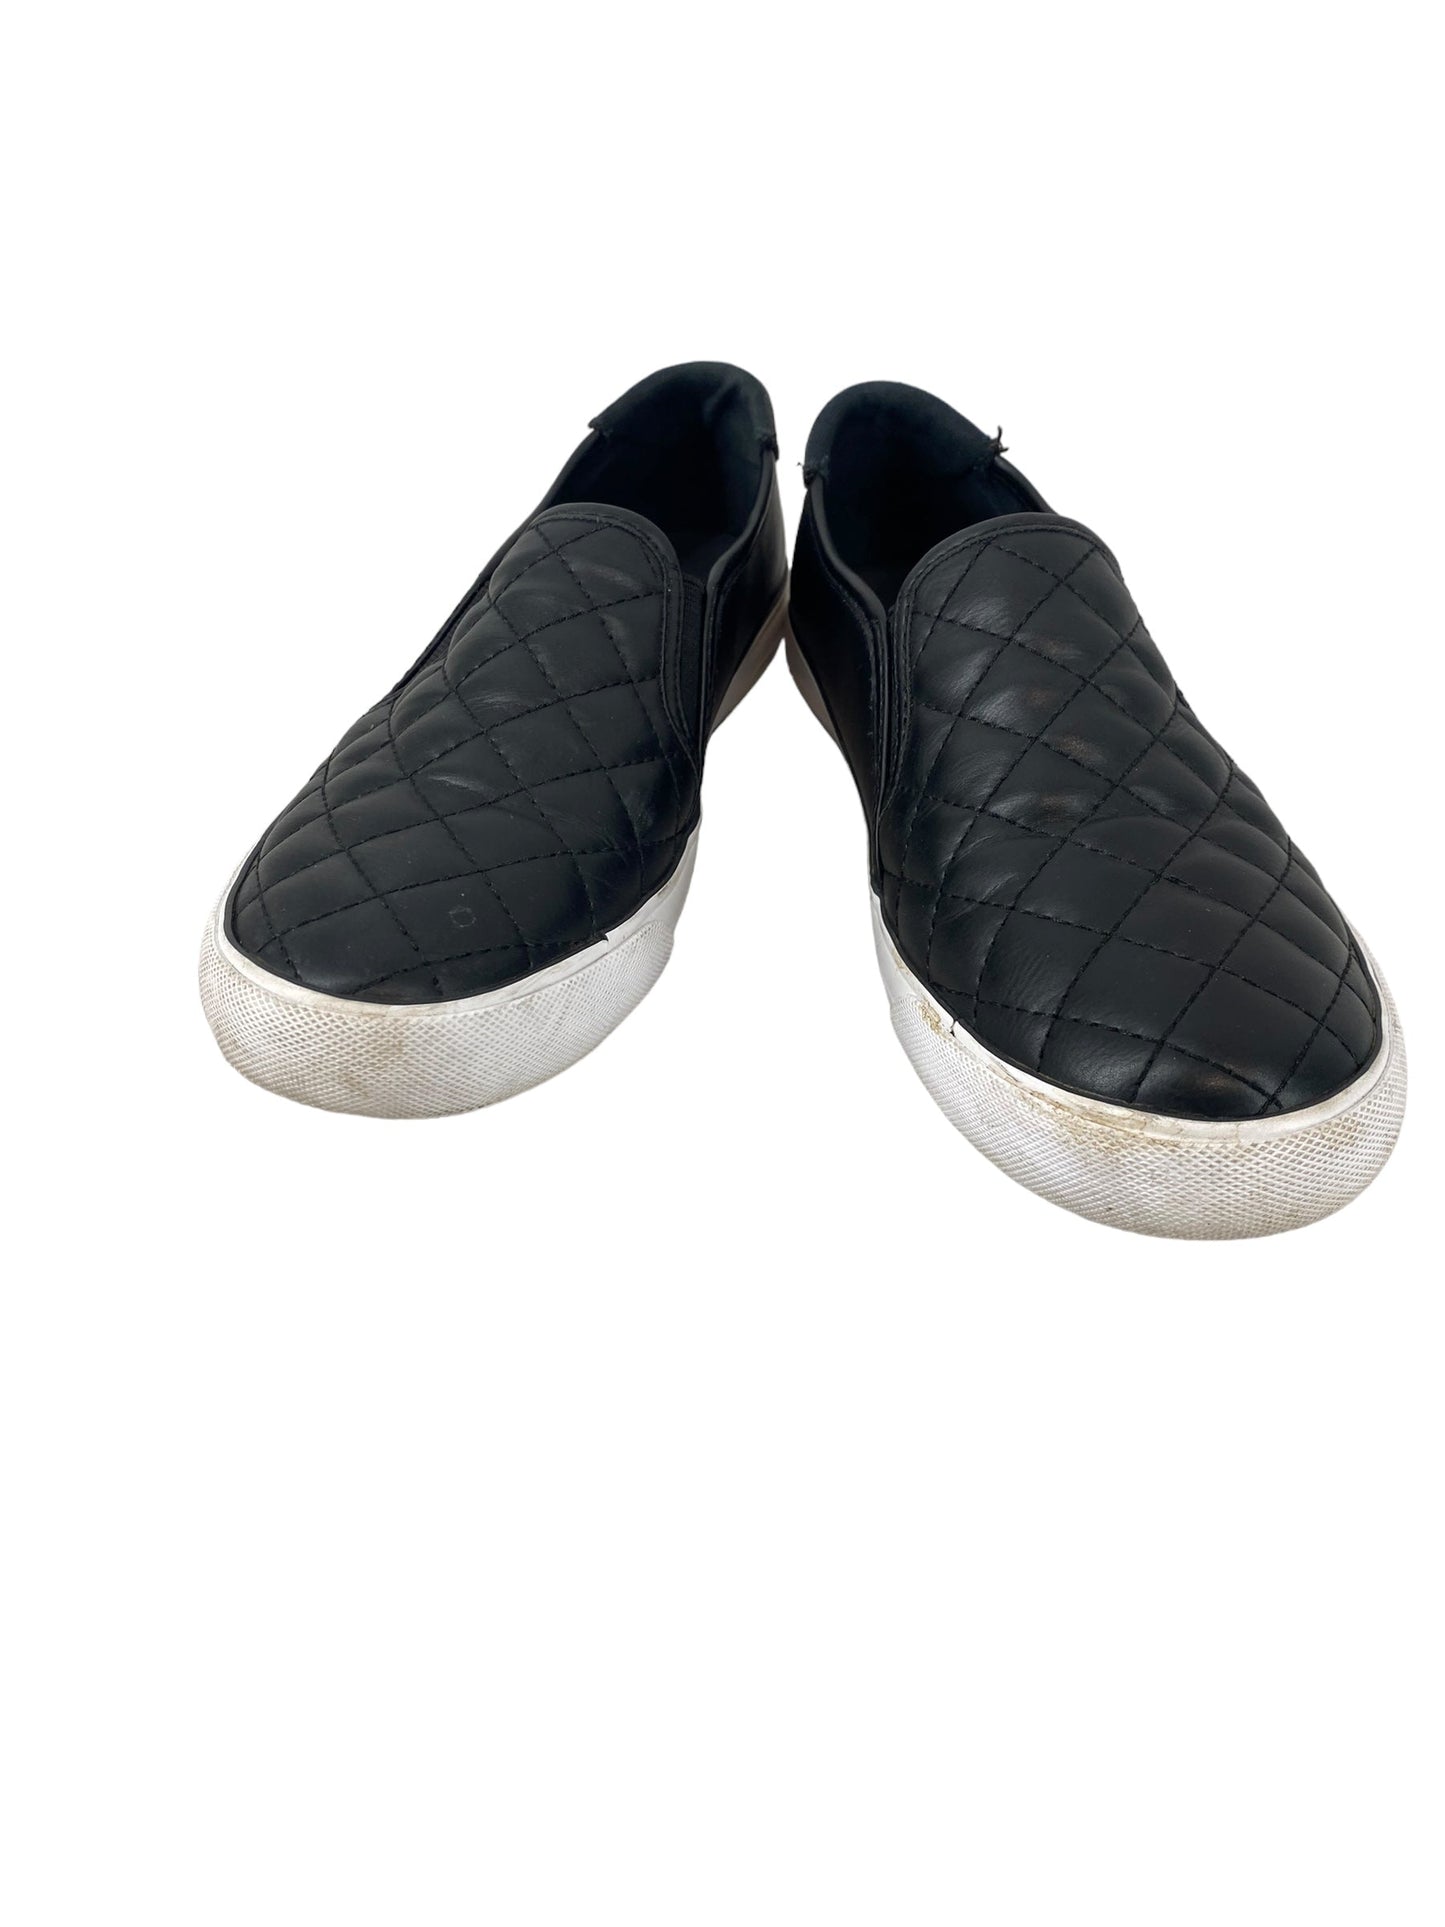 Black Shoes Flats Guess, Size 8